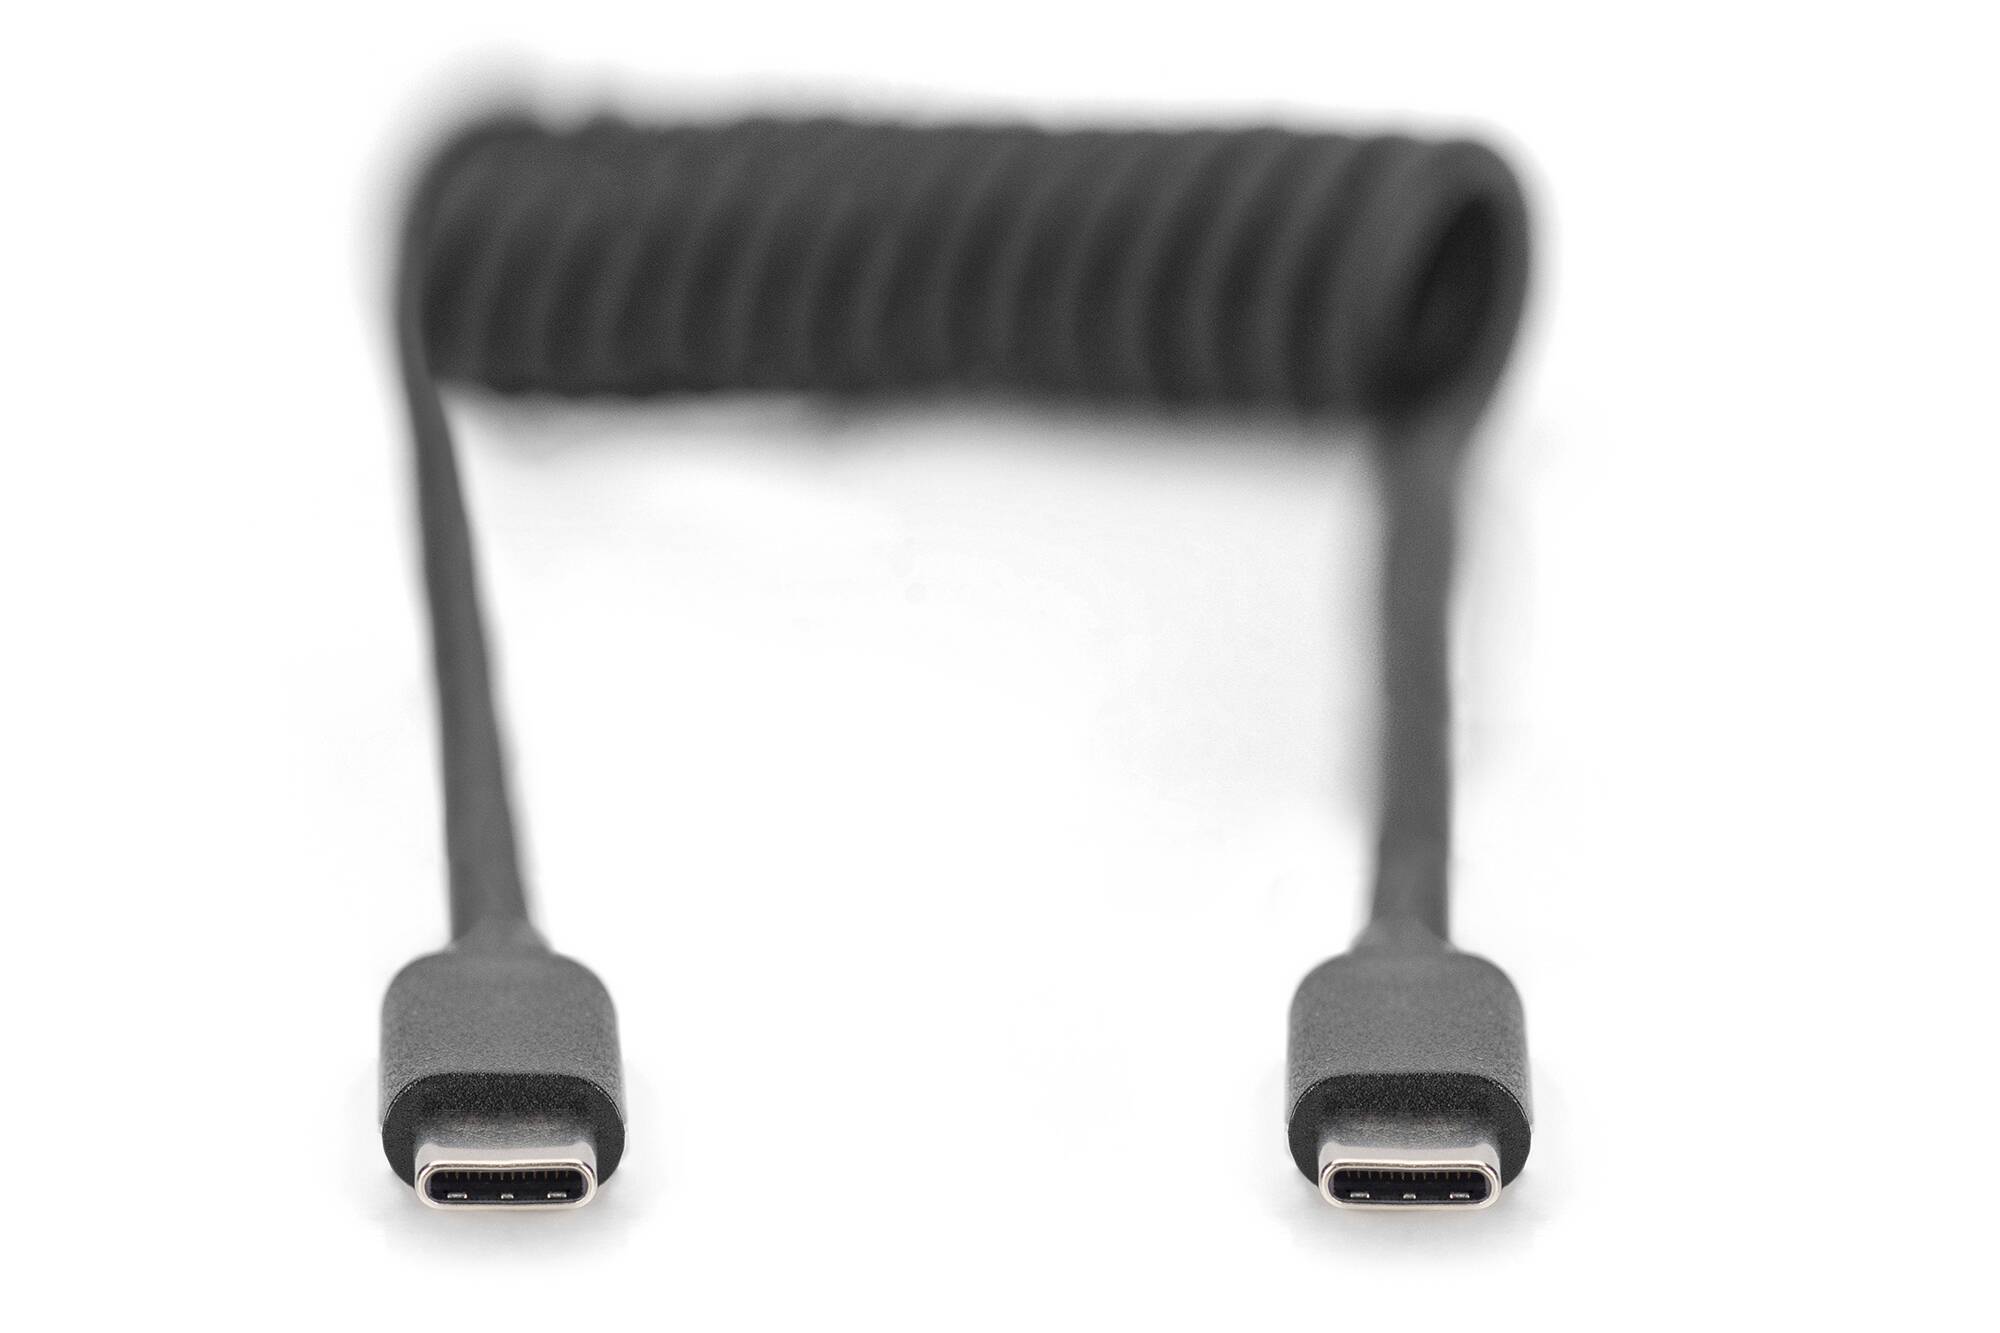 DIGITUS Cavo a spirale USB 2.0 – da USB – C a USB – C MT 1